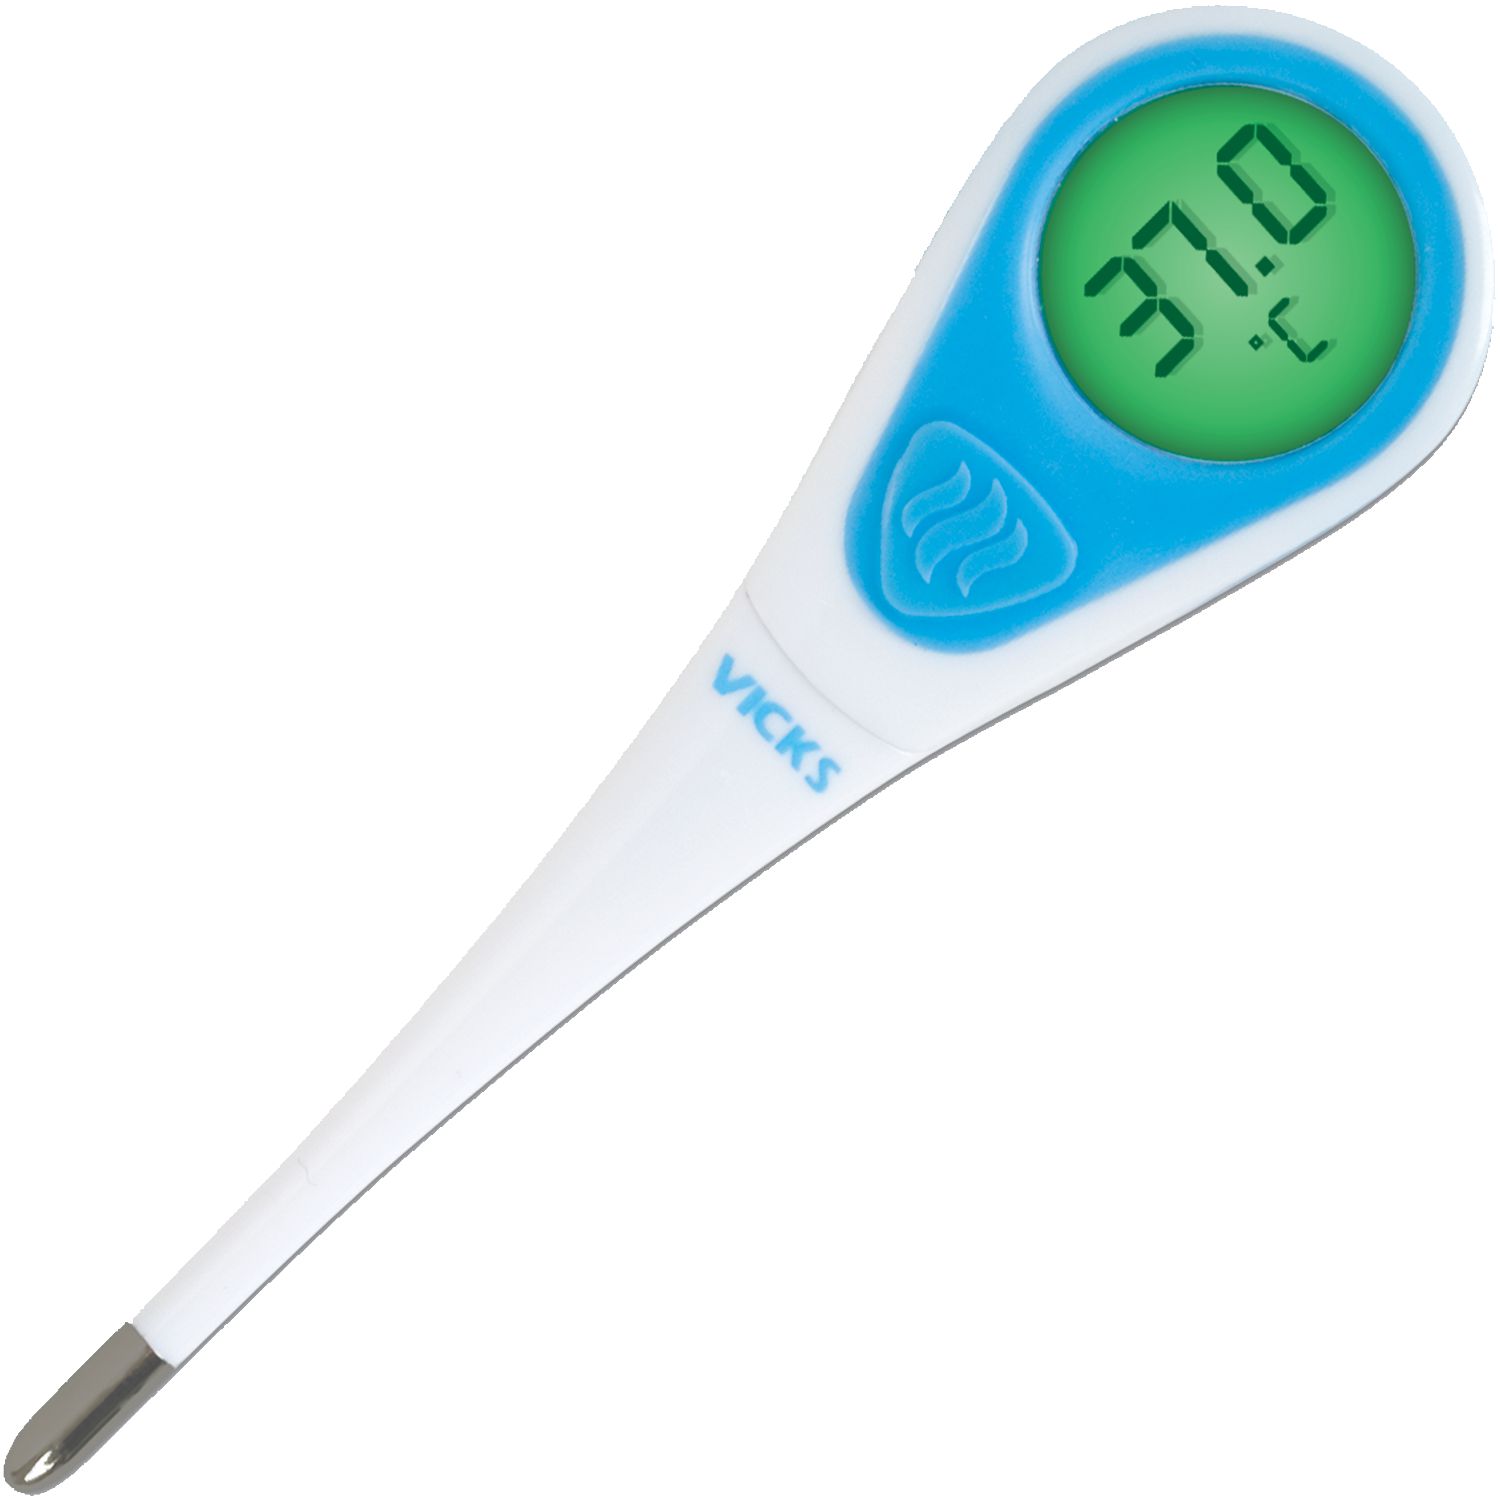 Predictor Thermomètre Électronique 1 pc(s) - Redcare Pharmacie